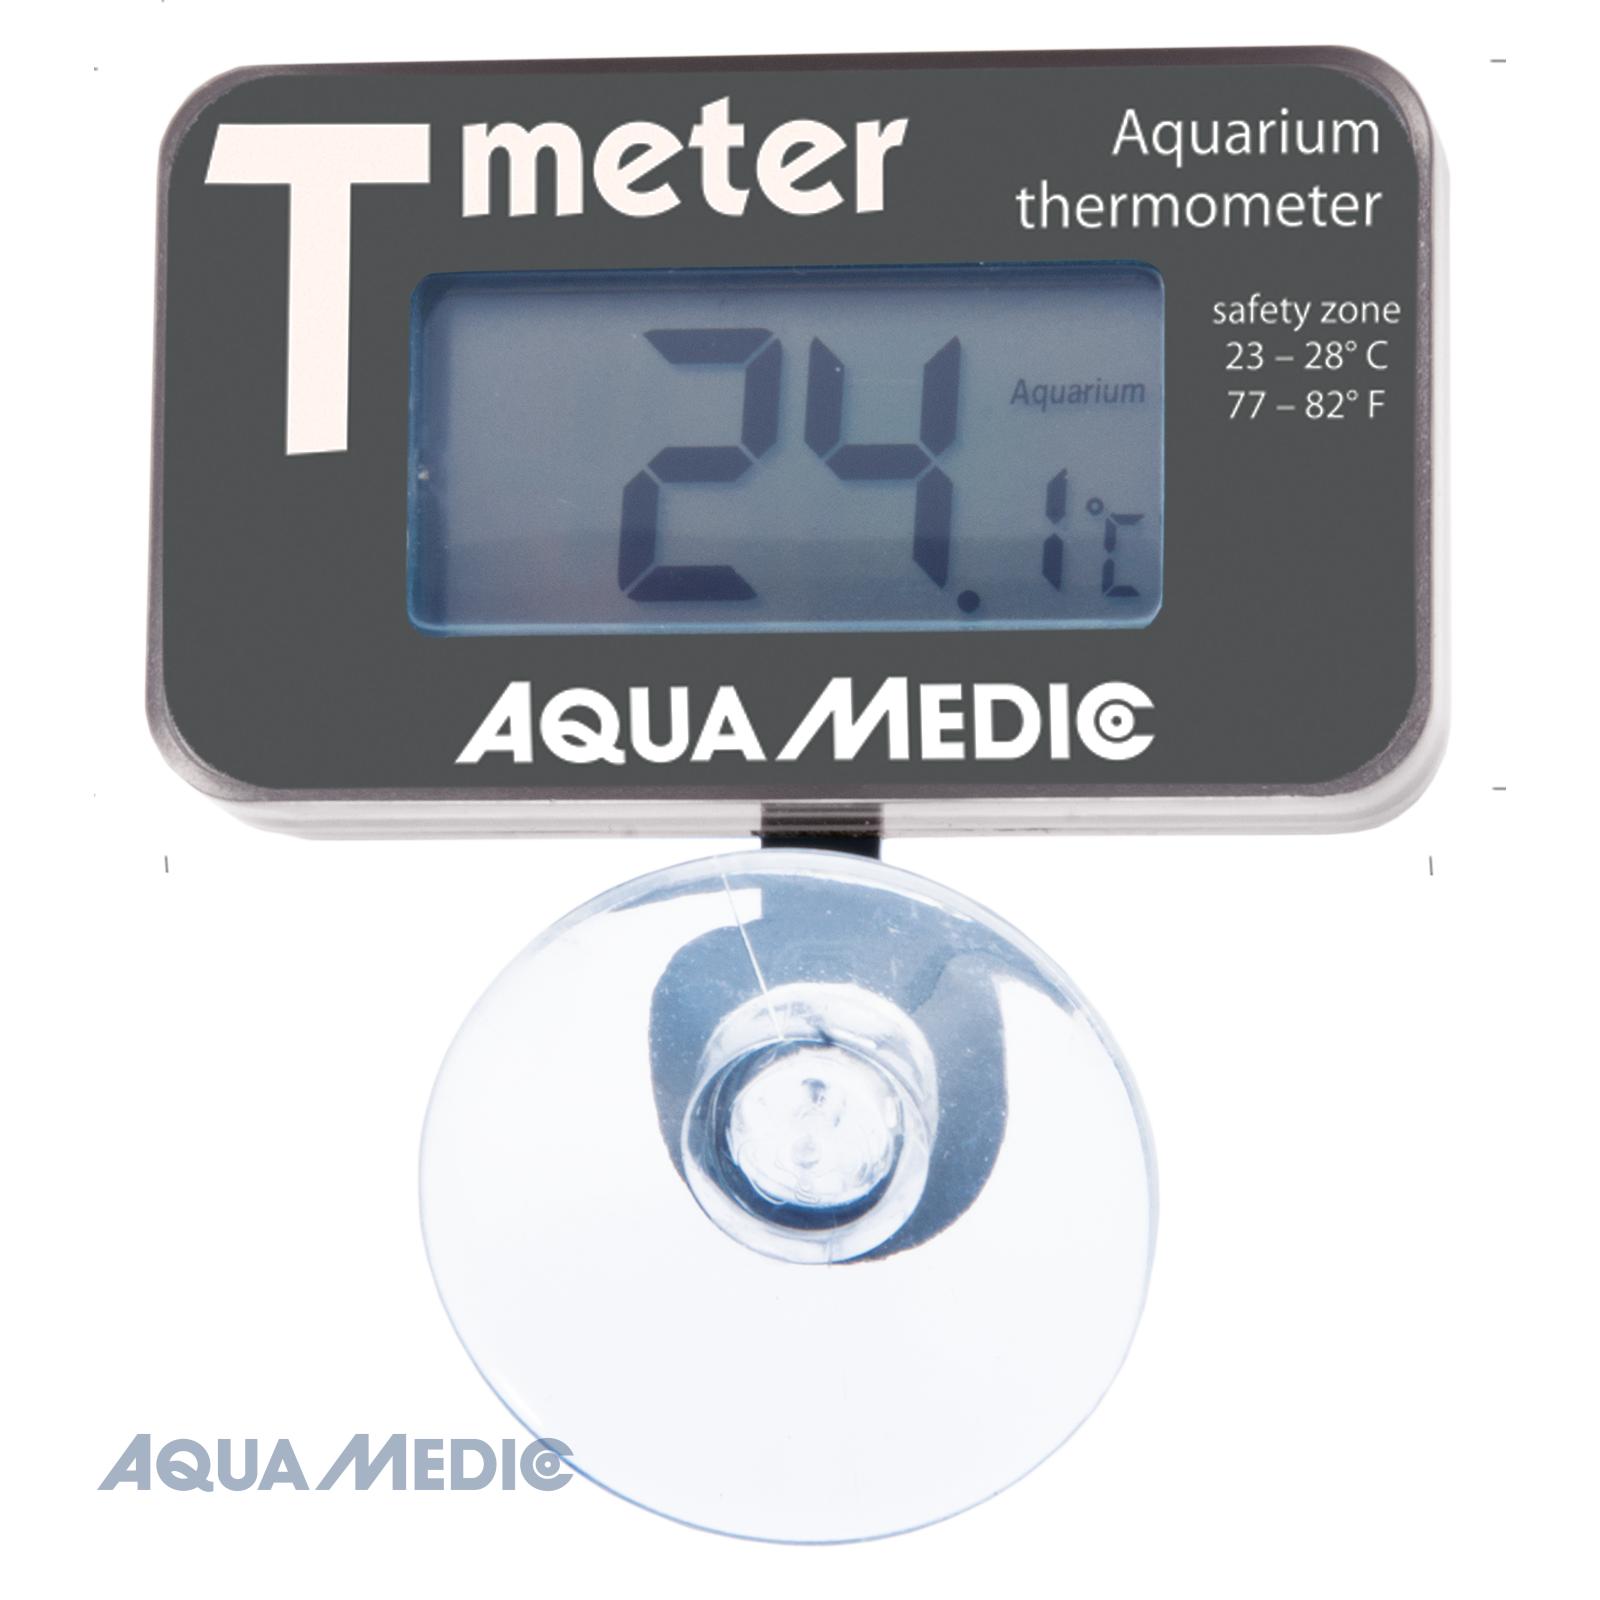 Aqua Medic t meter